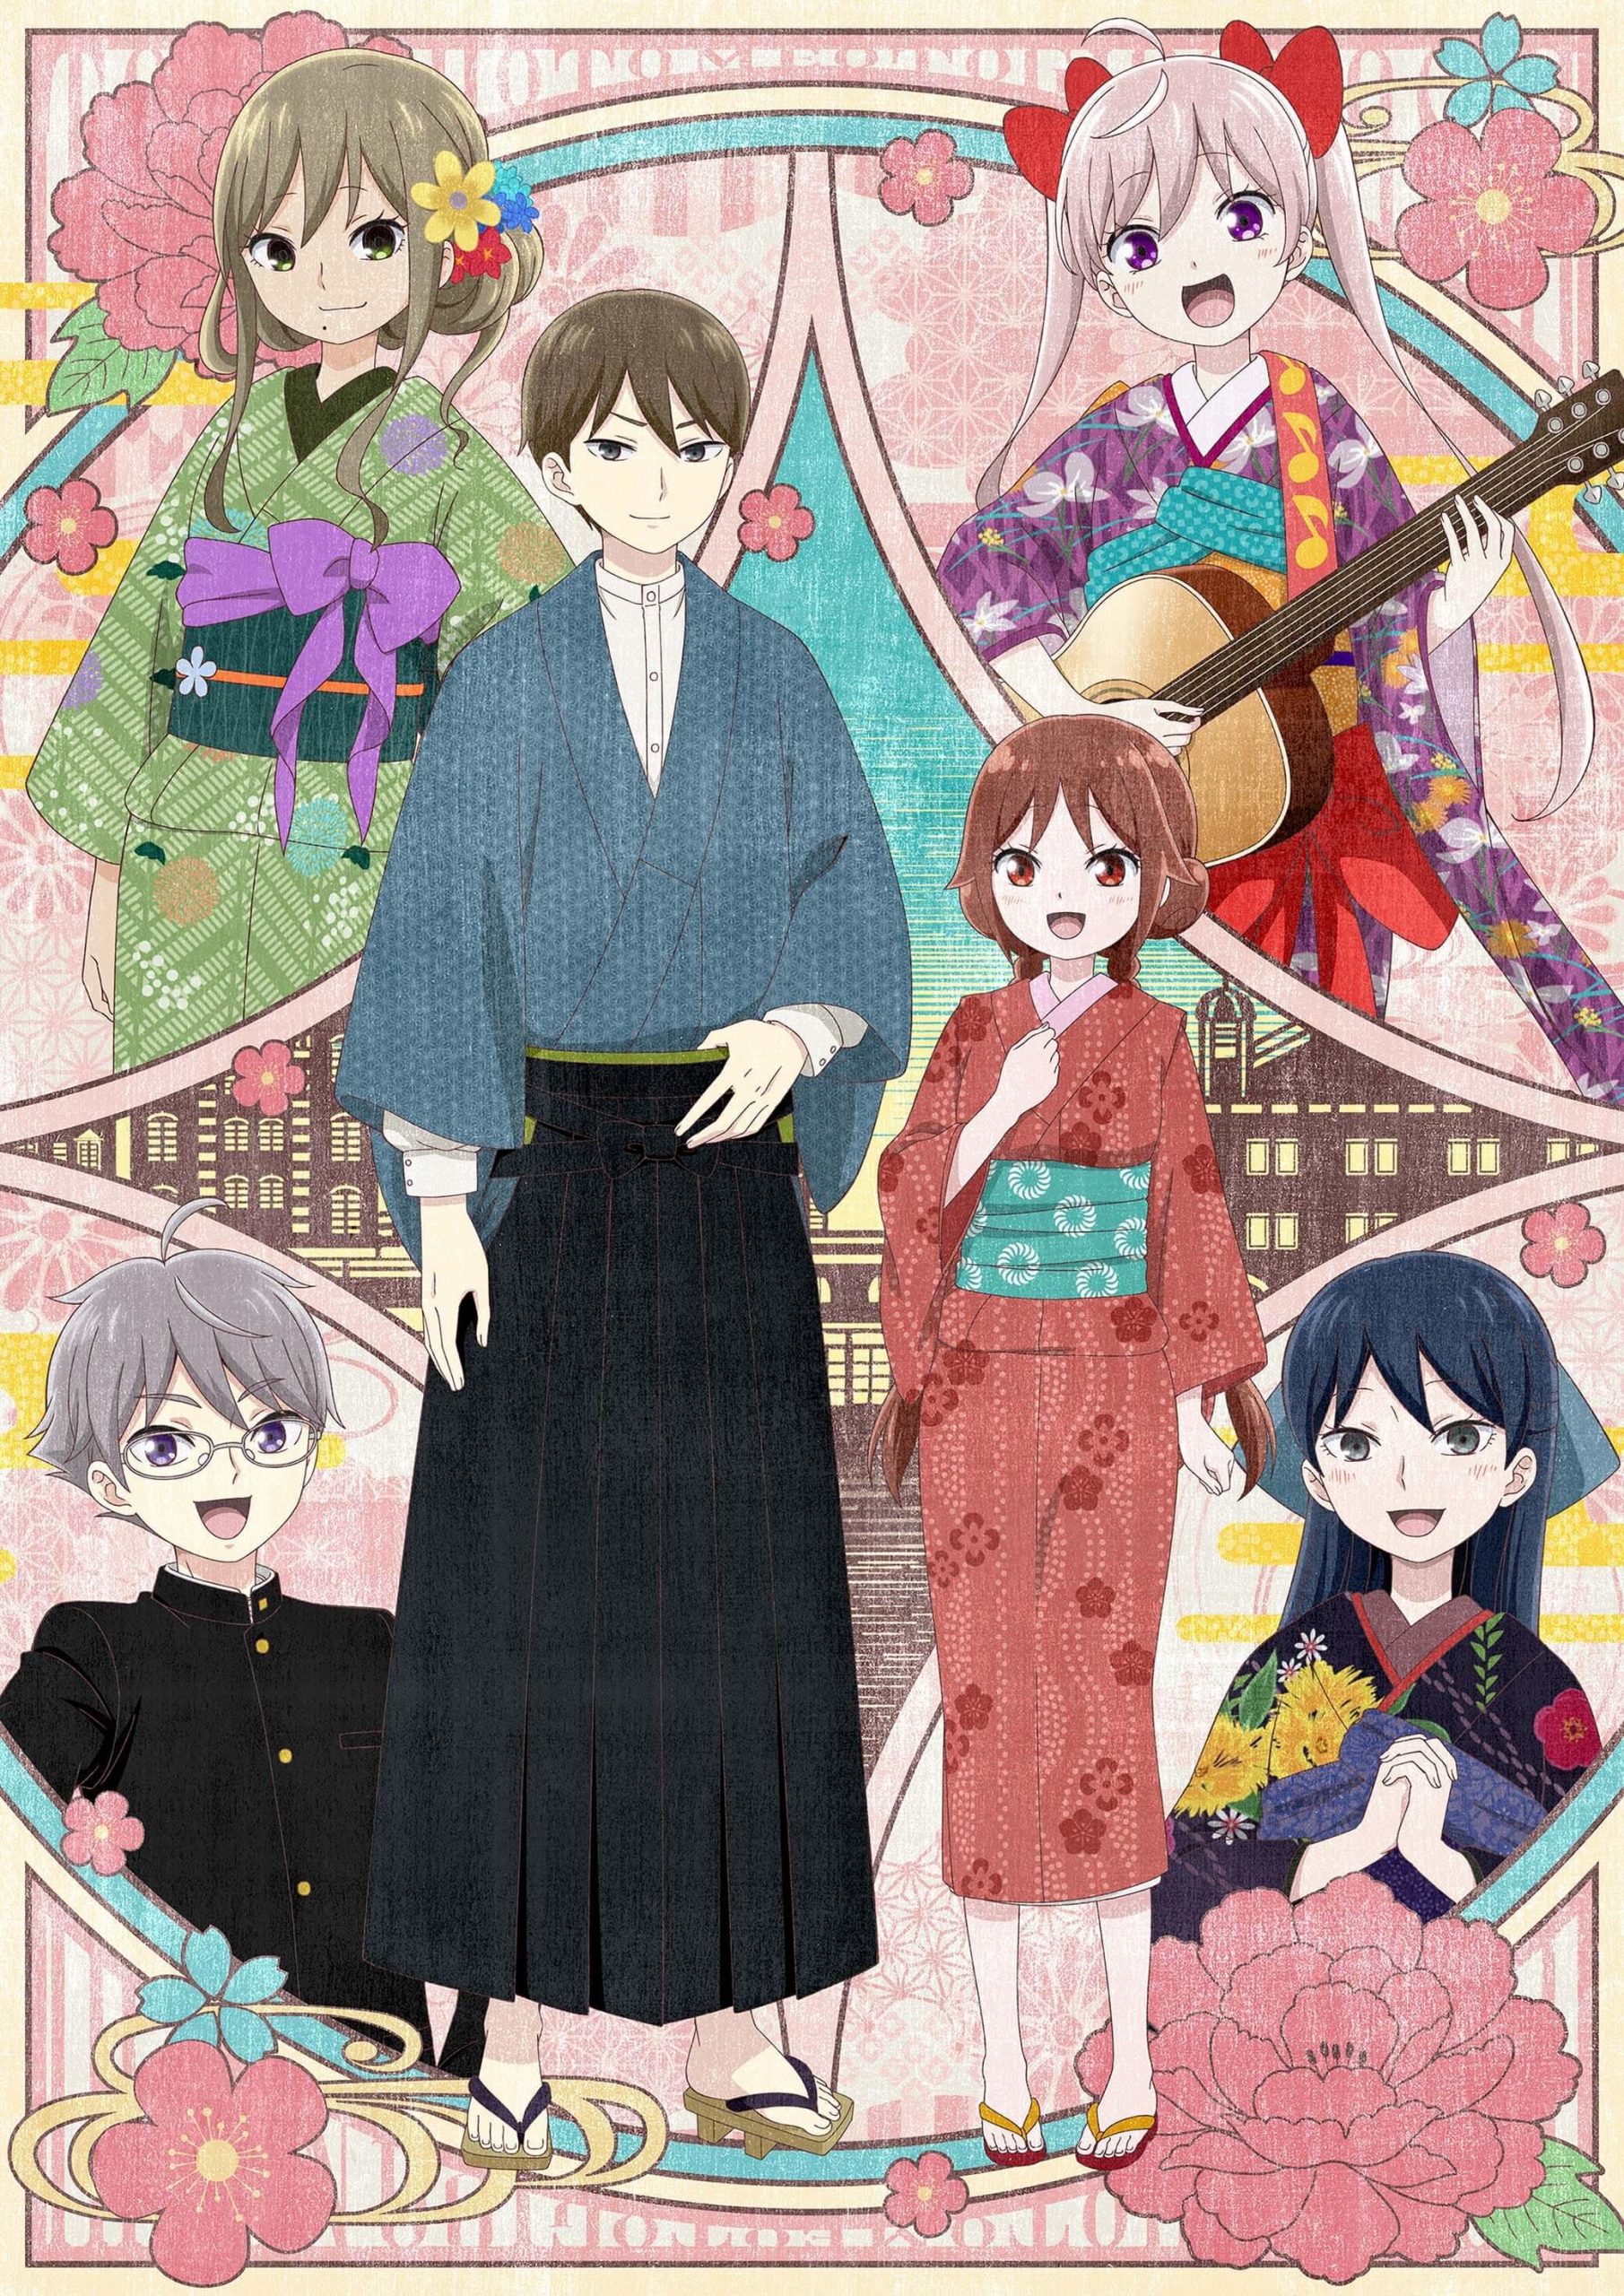 Taisho Otome Otogi Banashi – Nova imagem promocional do anime - Manga Livre  RS